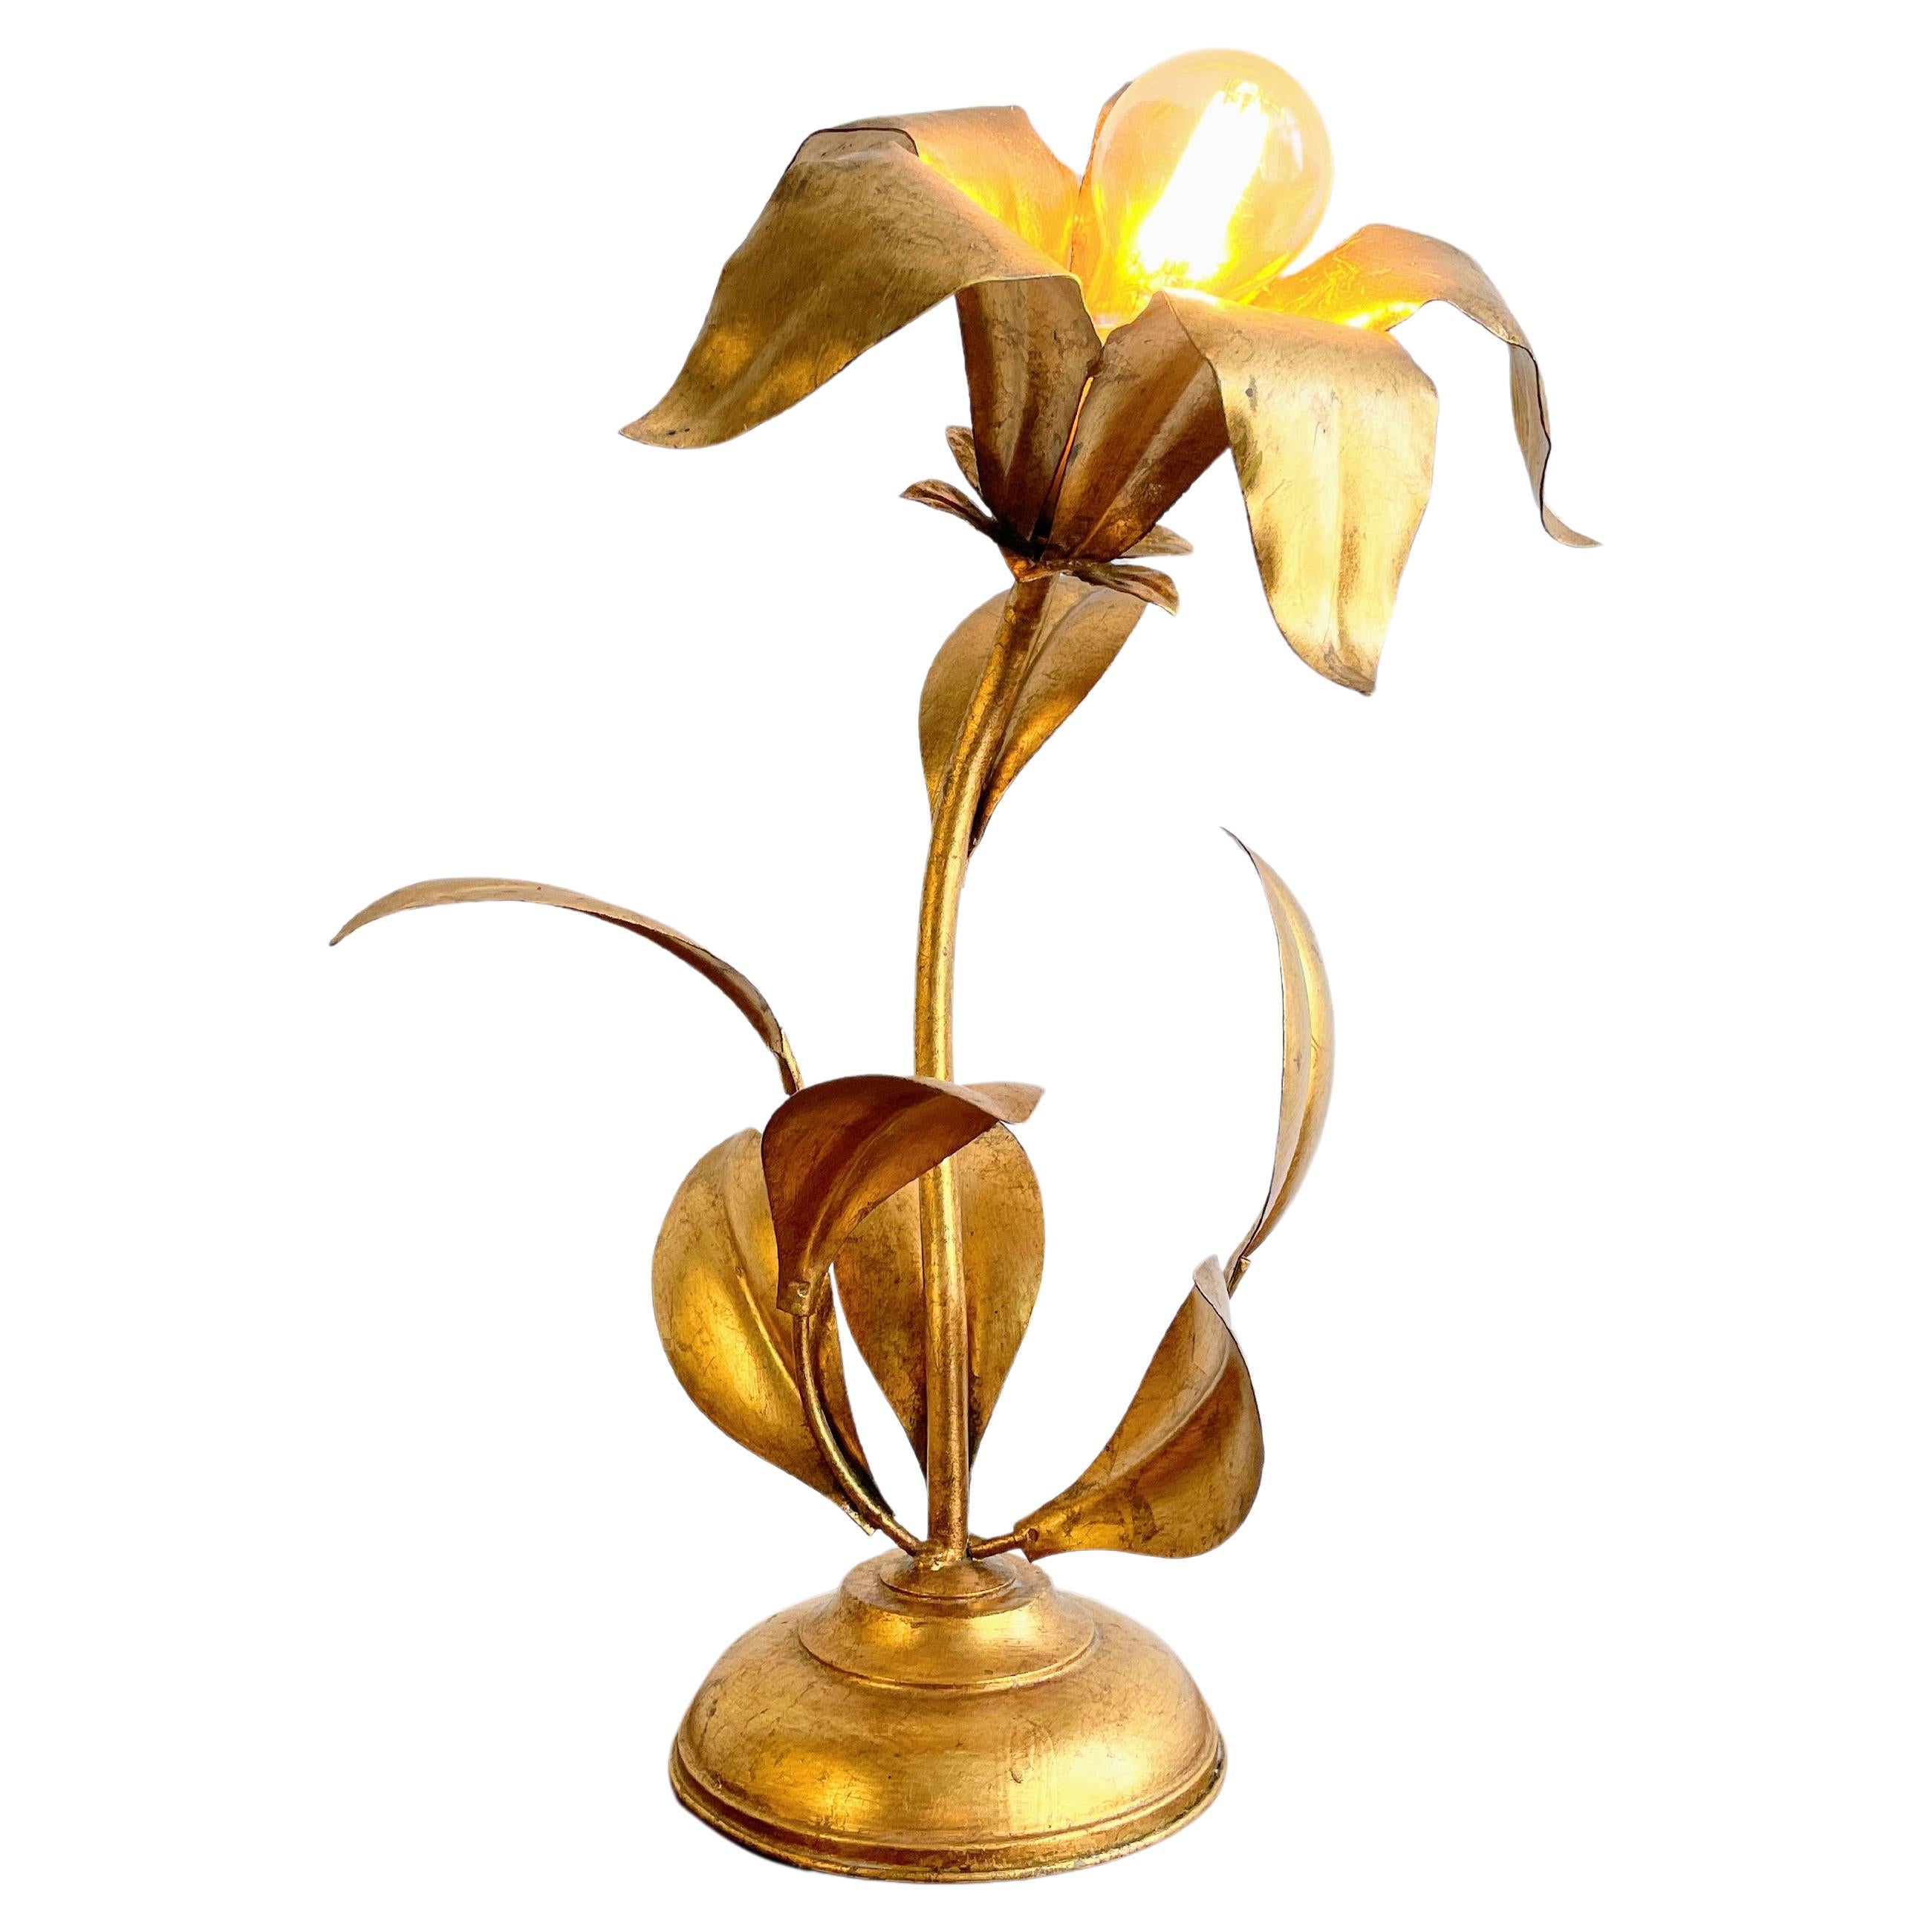 Lampe de table en forme de fleur de style Hollywood Regency dans le style de Koegl, or